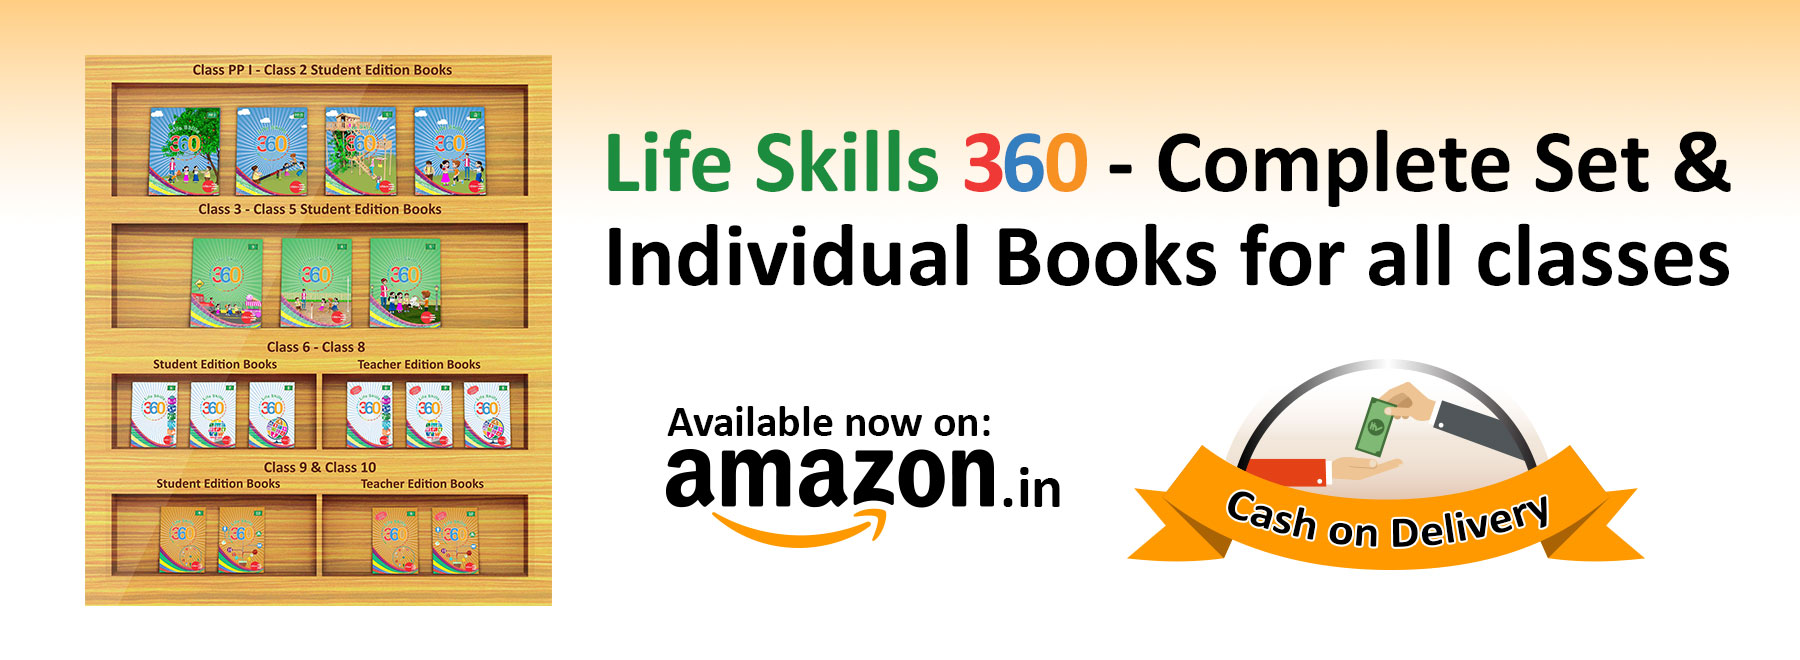 Life Skills 360 Amazon, life SKills, Lifeskills360, Amazon Books,